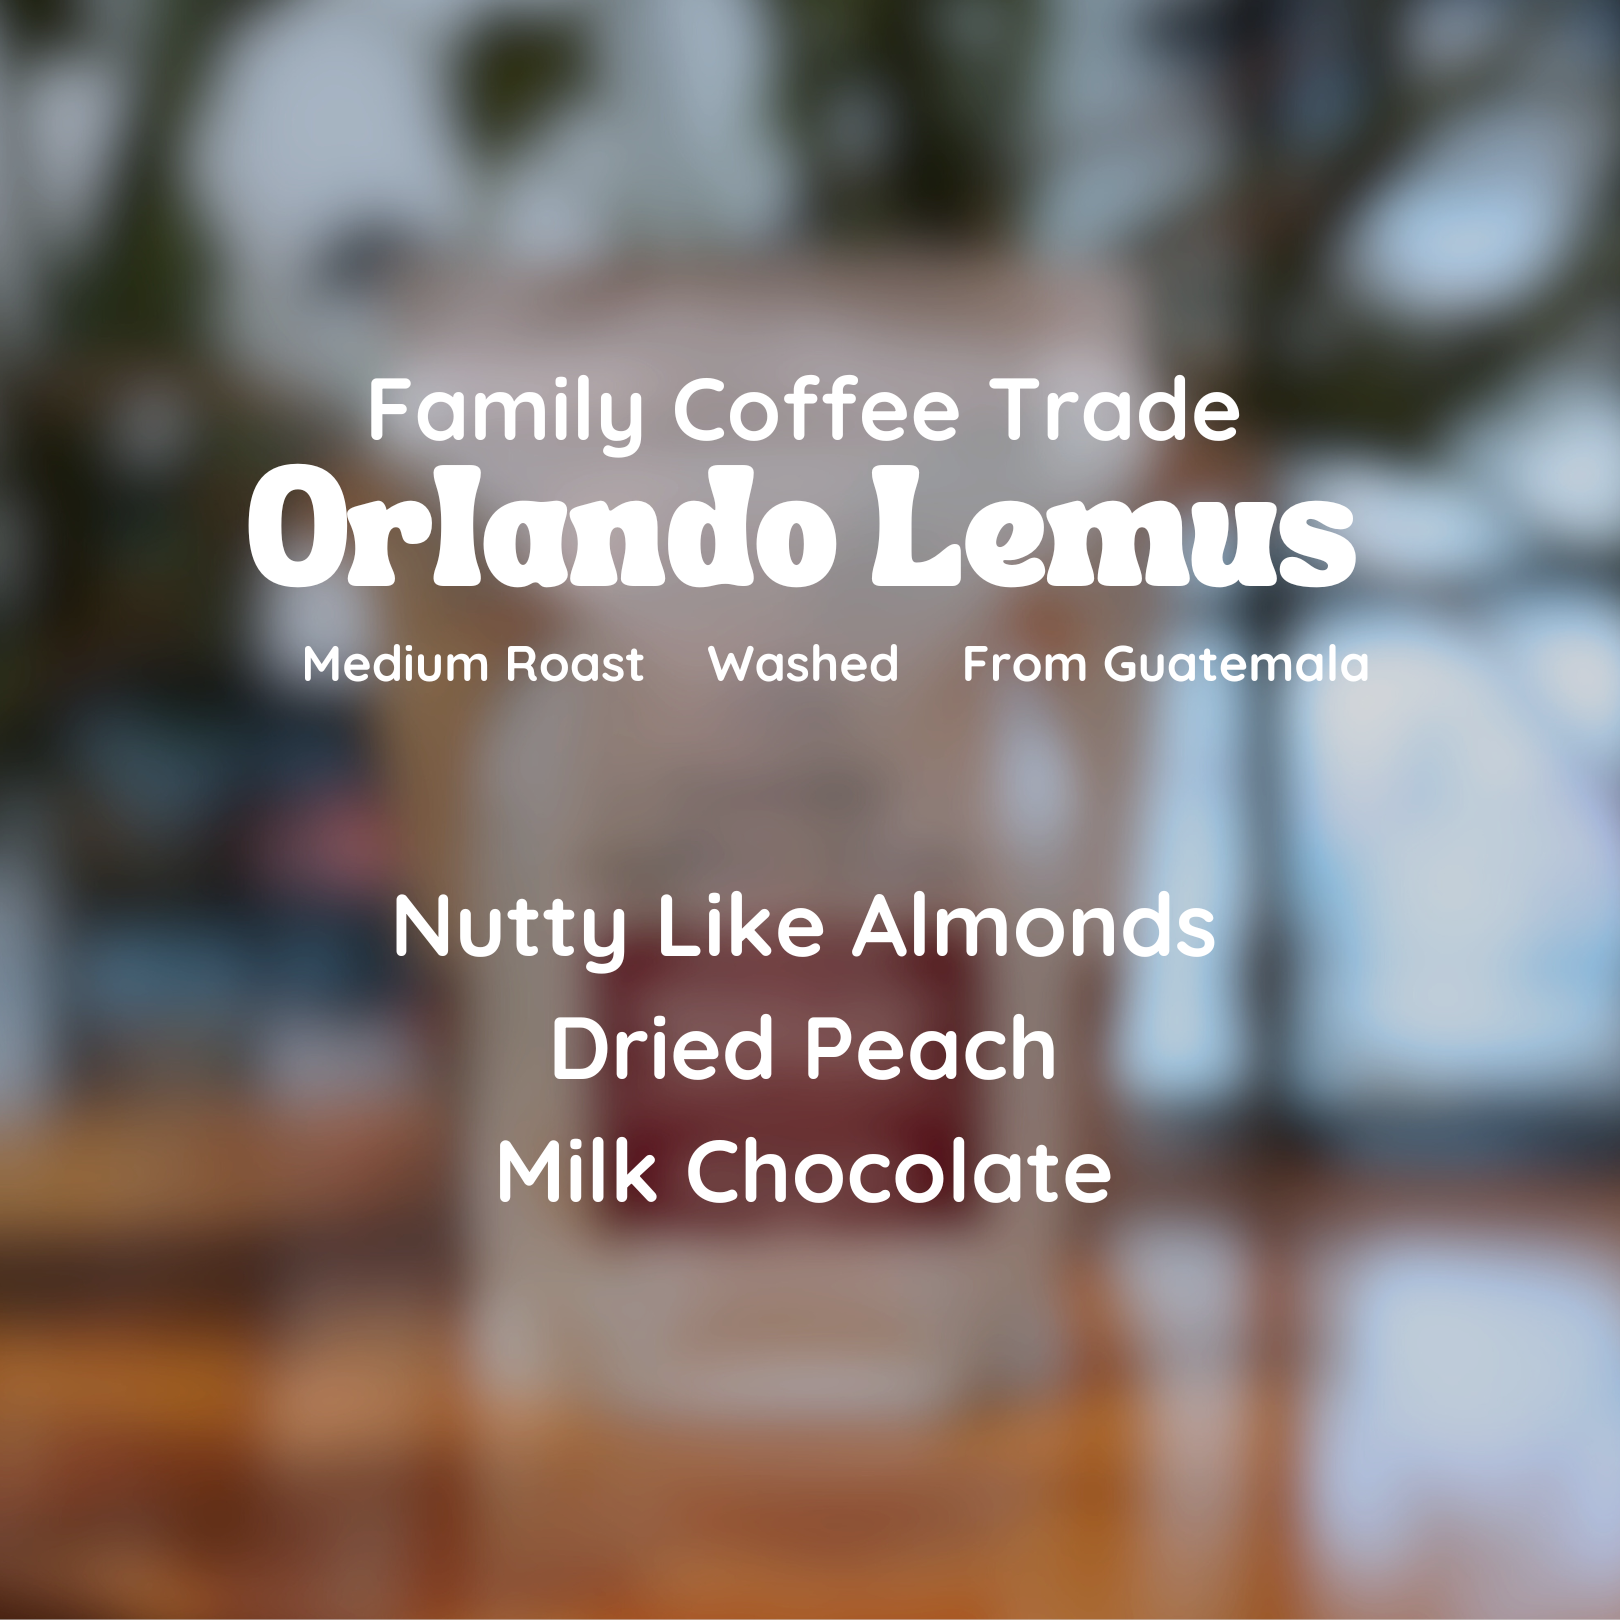 Family Coffee Trade Orlando Lemus Coffee Beans